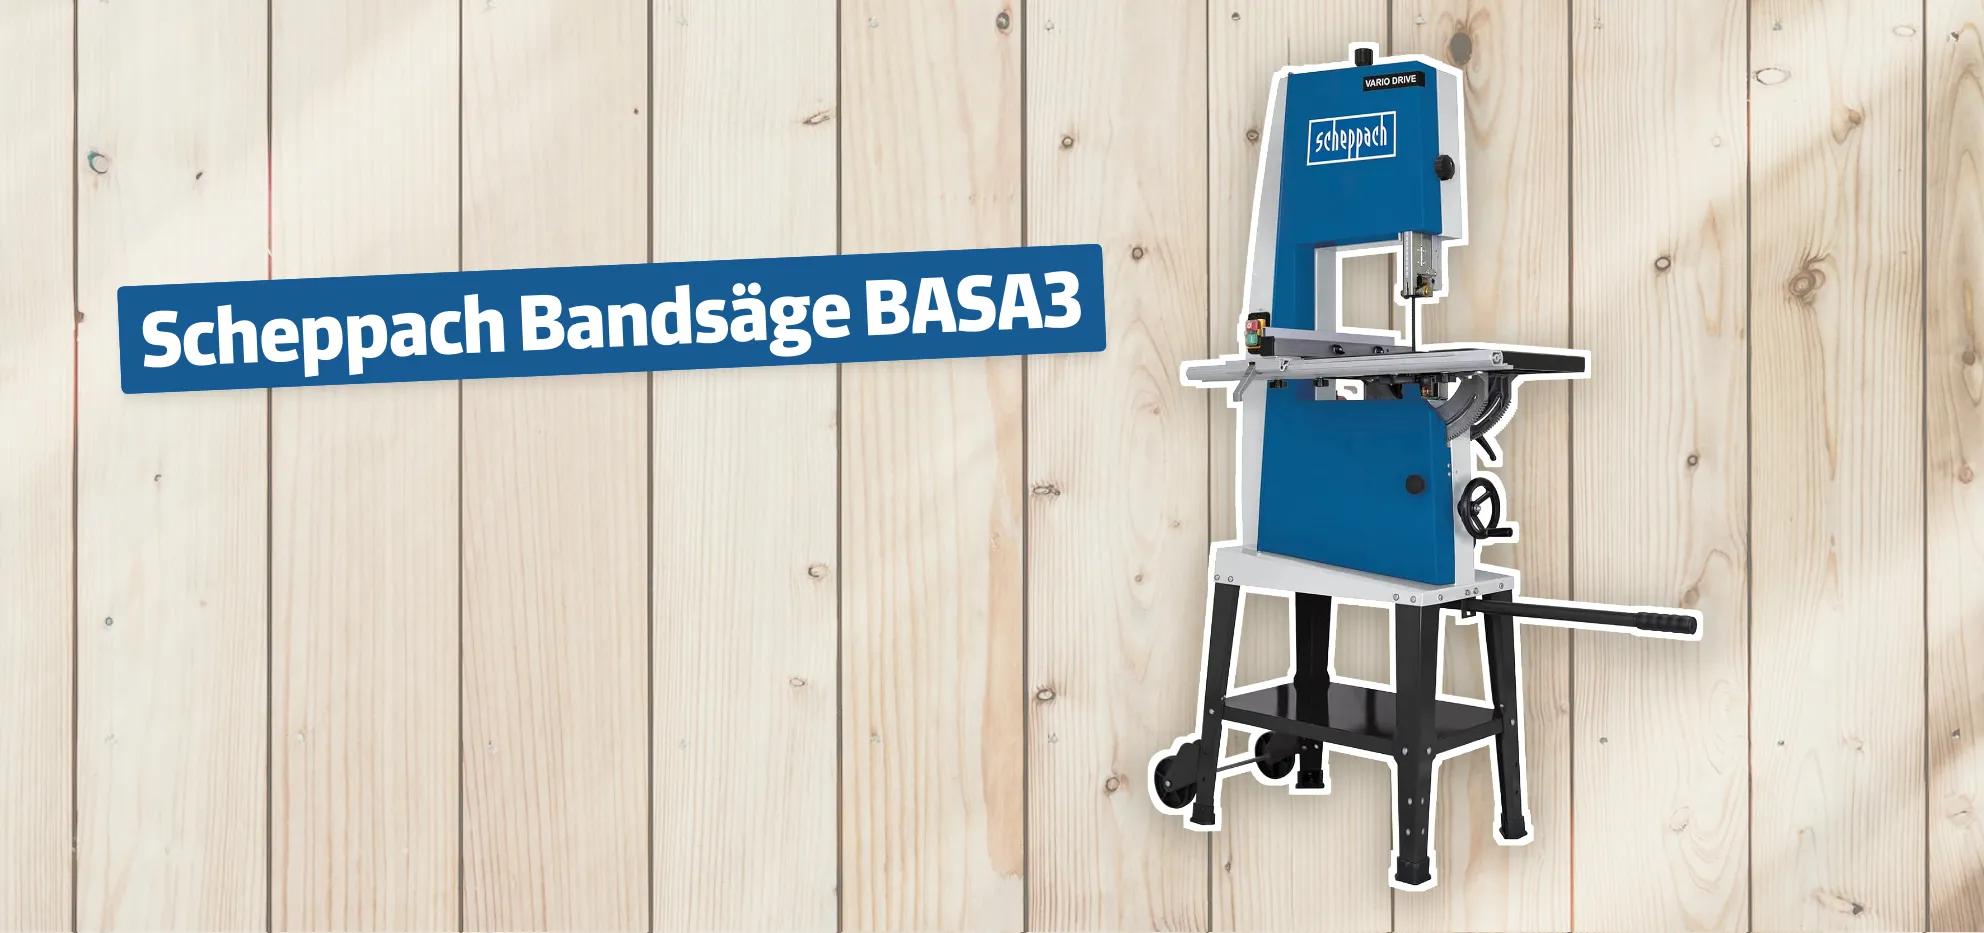 Scheppach Bandsäge BASA3